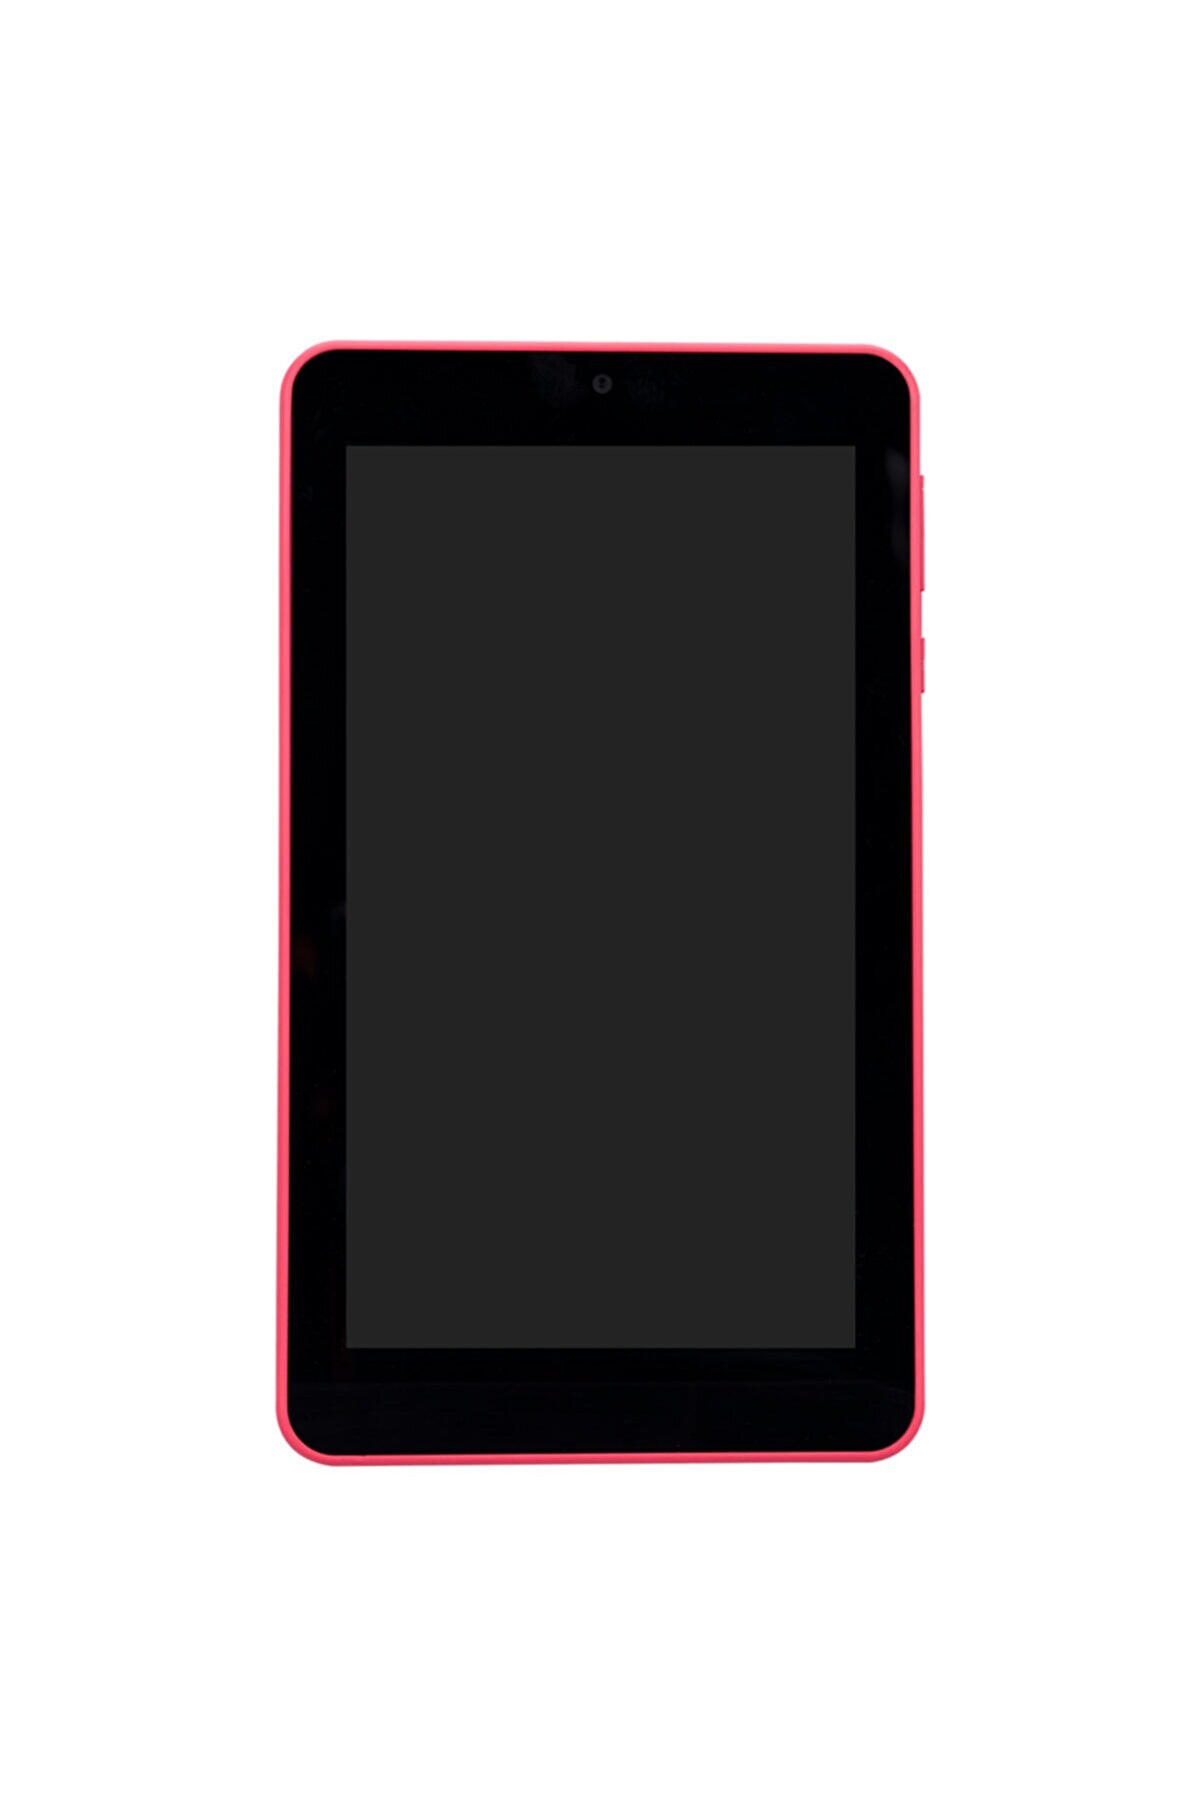 Everest Everpad Dc-8015 Kırmızı Wifi+bt4.0 Çift Kamera 1024-600 Ips 2gb 1.0ghz 2g+16gb 7"android Tablet Pc